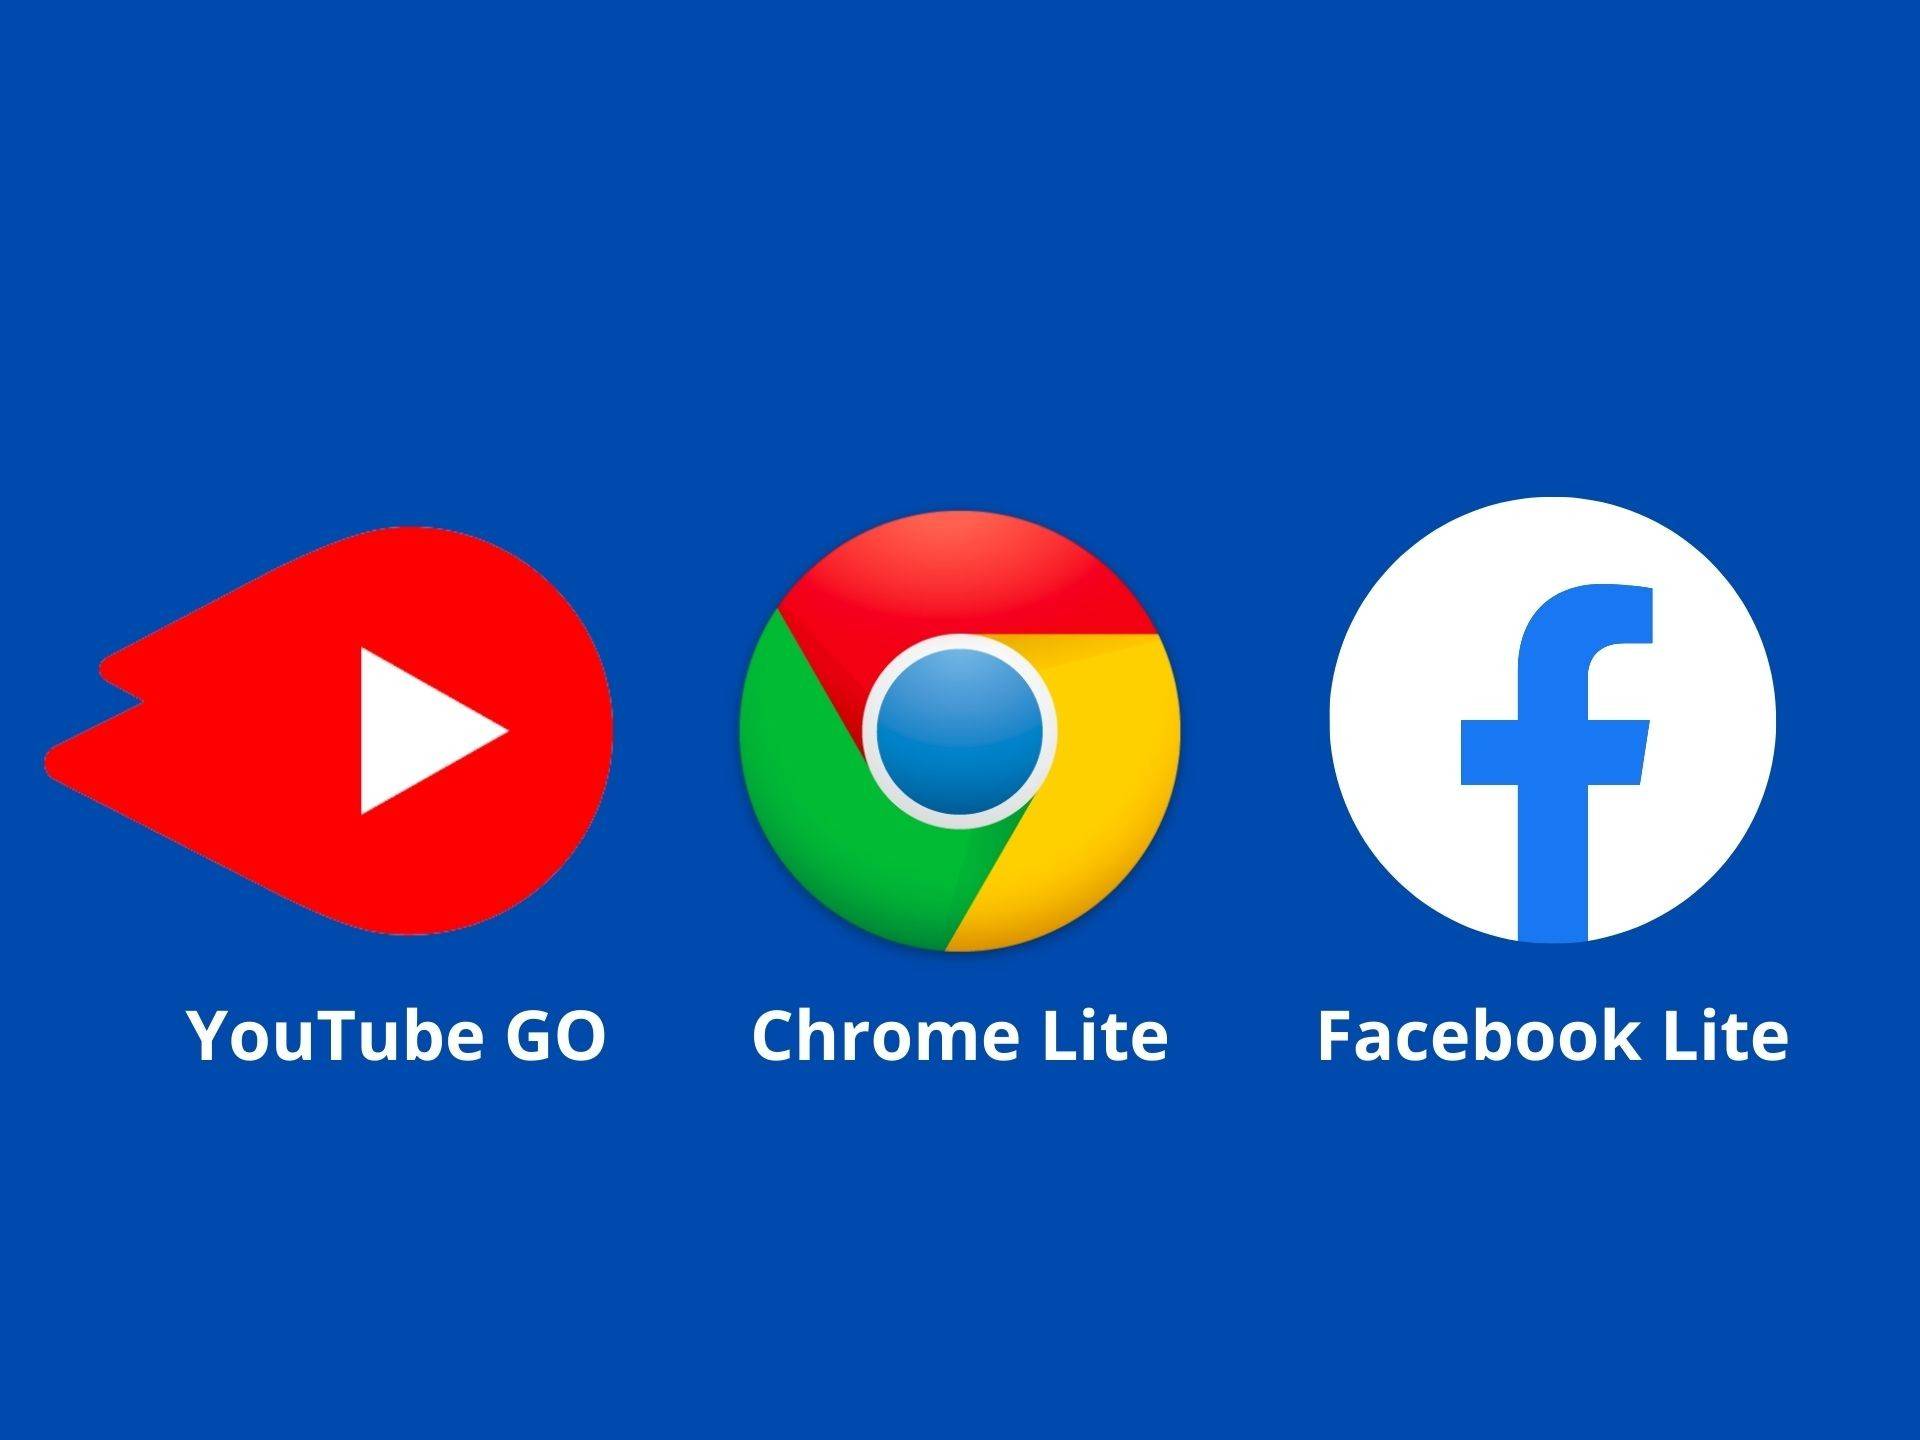 YouTube Go, Chrome Lite, and Facebook Lite icons